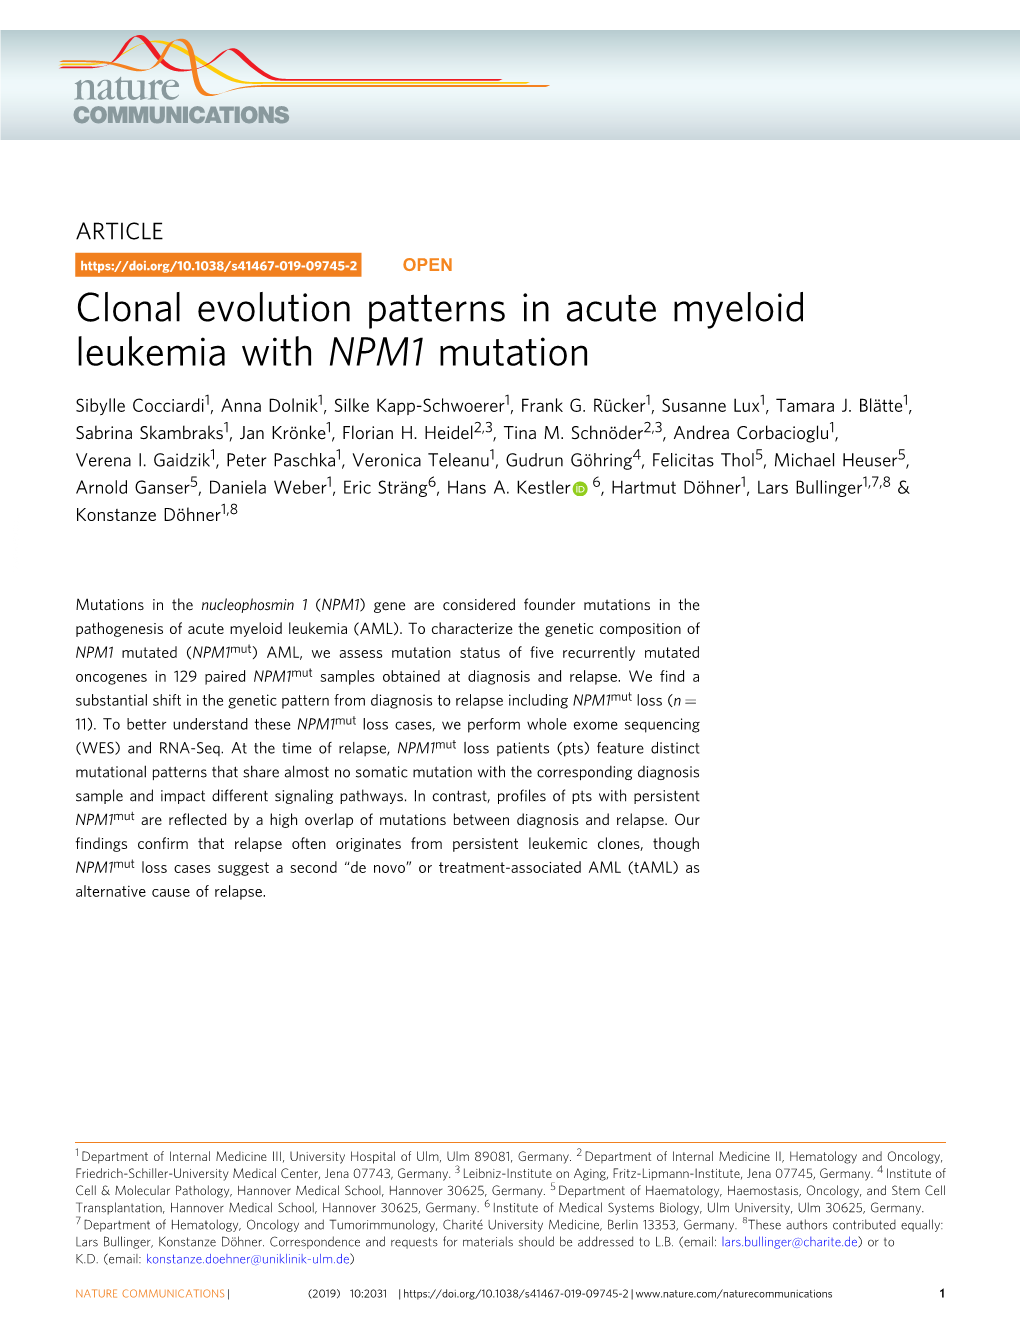 Clonal Evolution Patterns in Acute Myeloid Leukemia with NPM1 Mutation